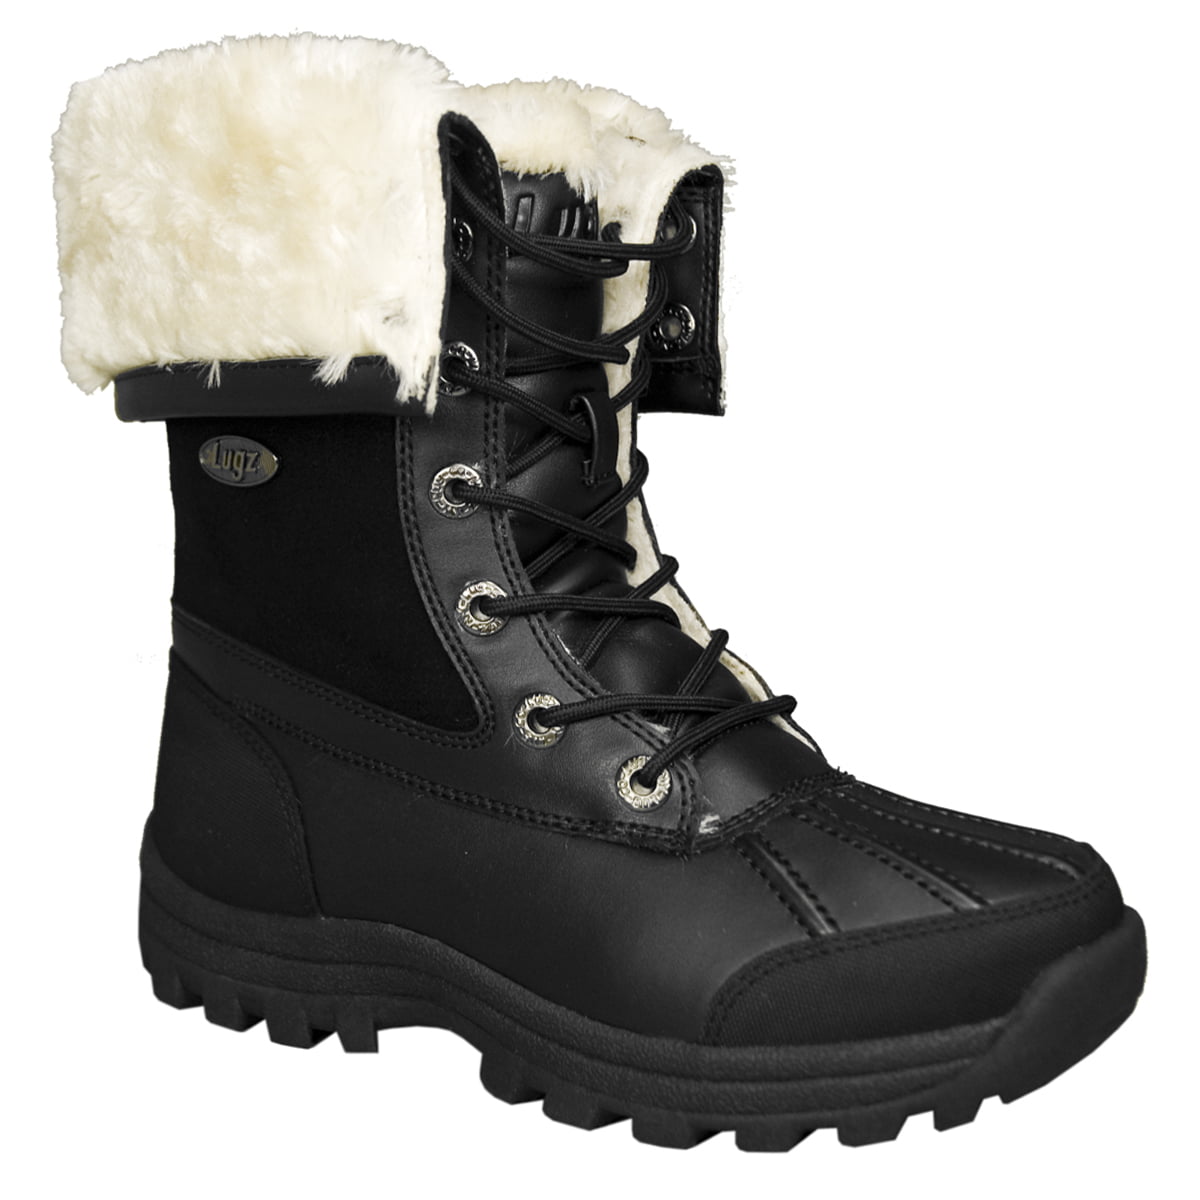 lugz women's tambora winter boots